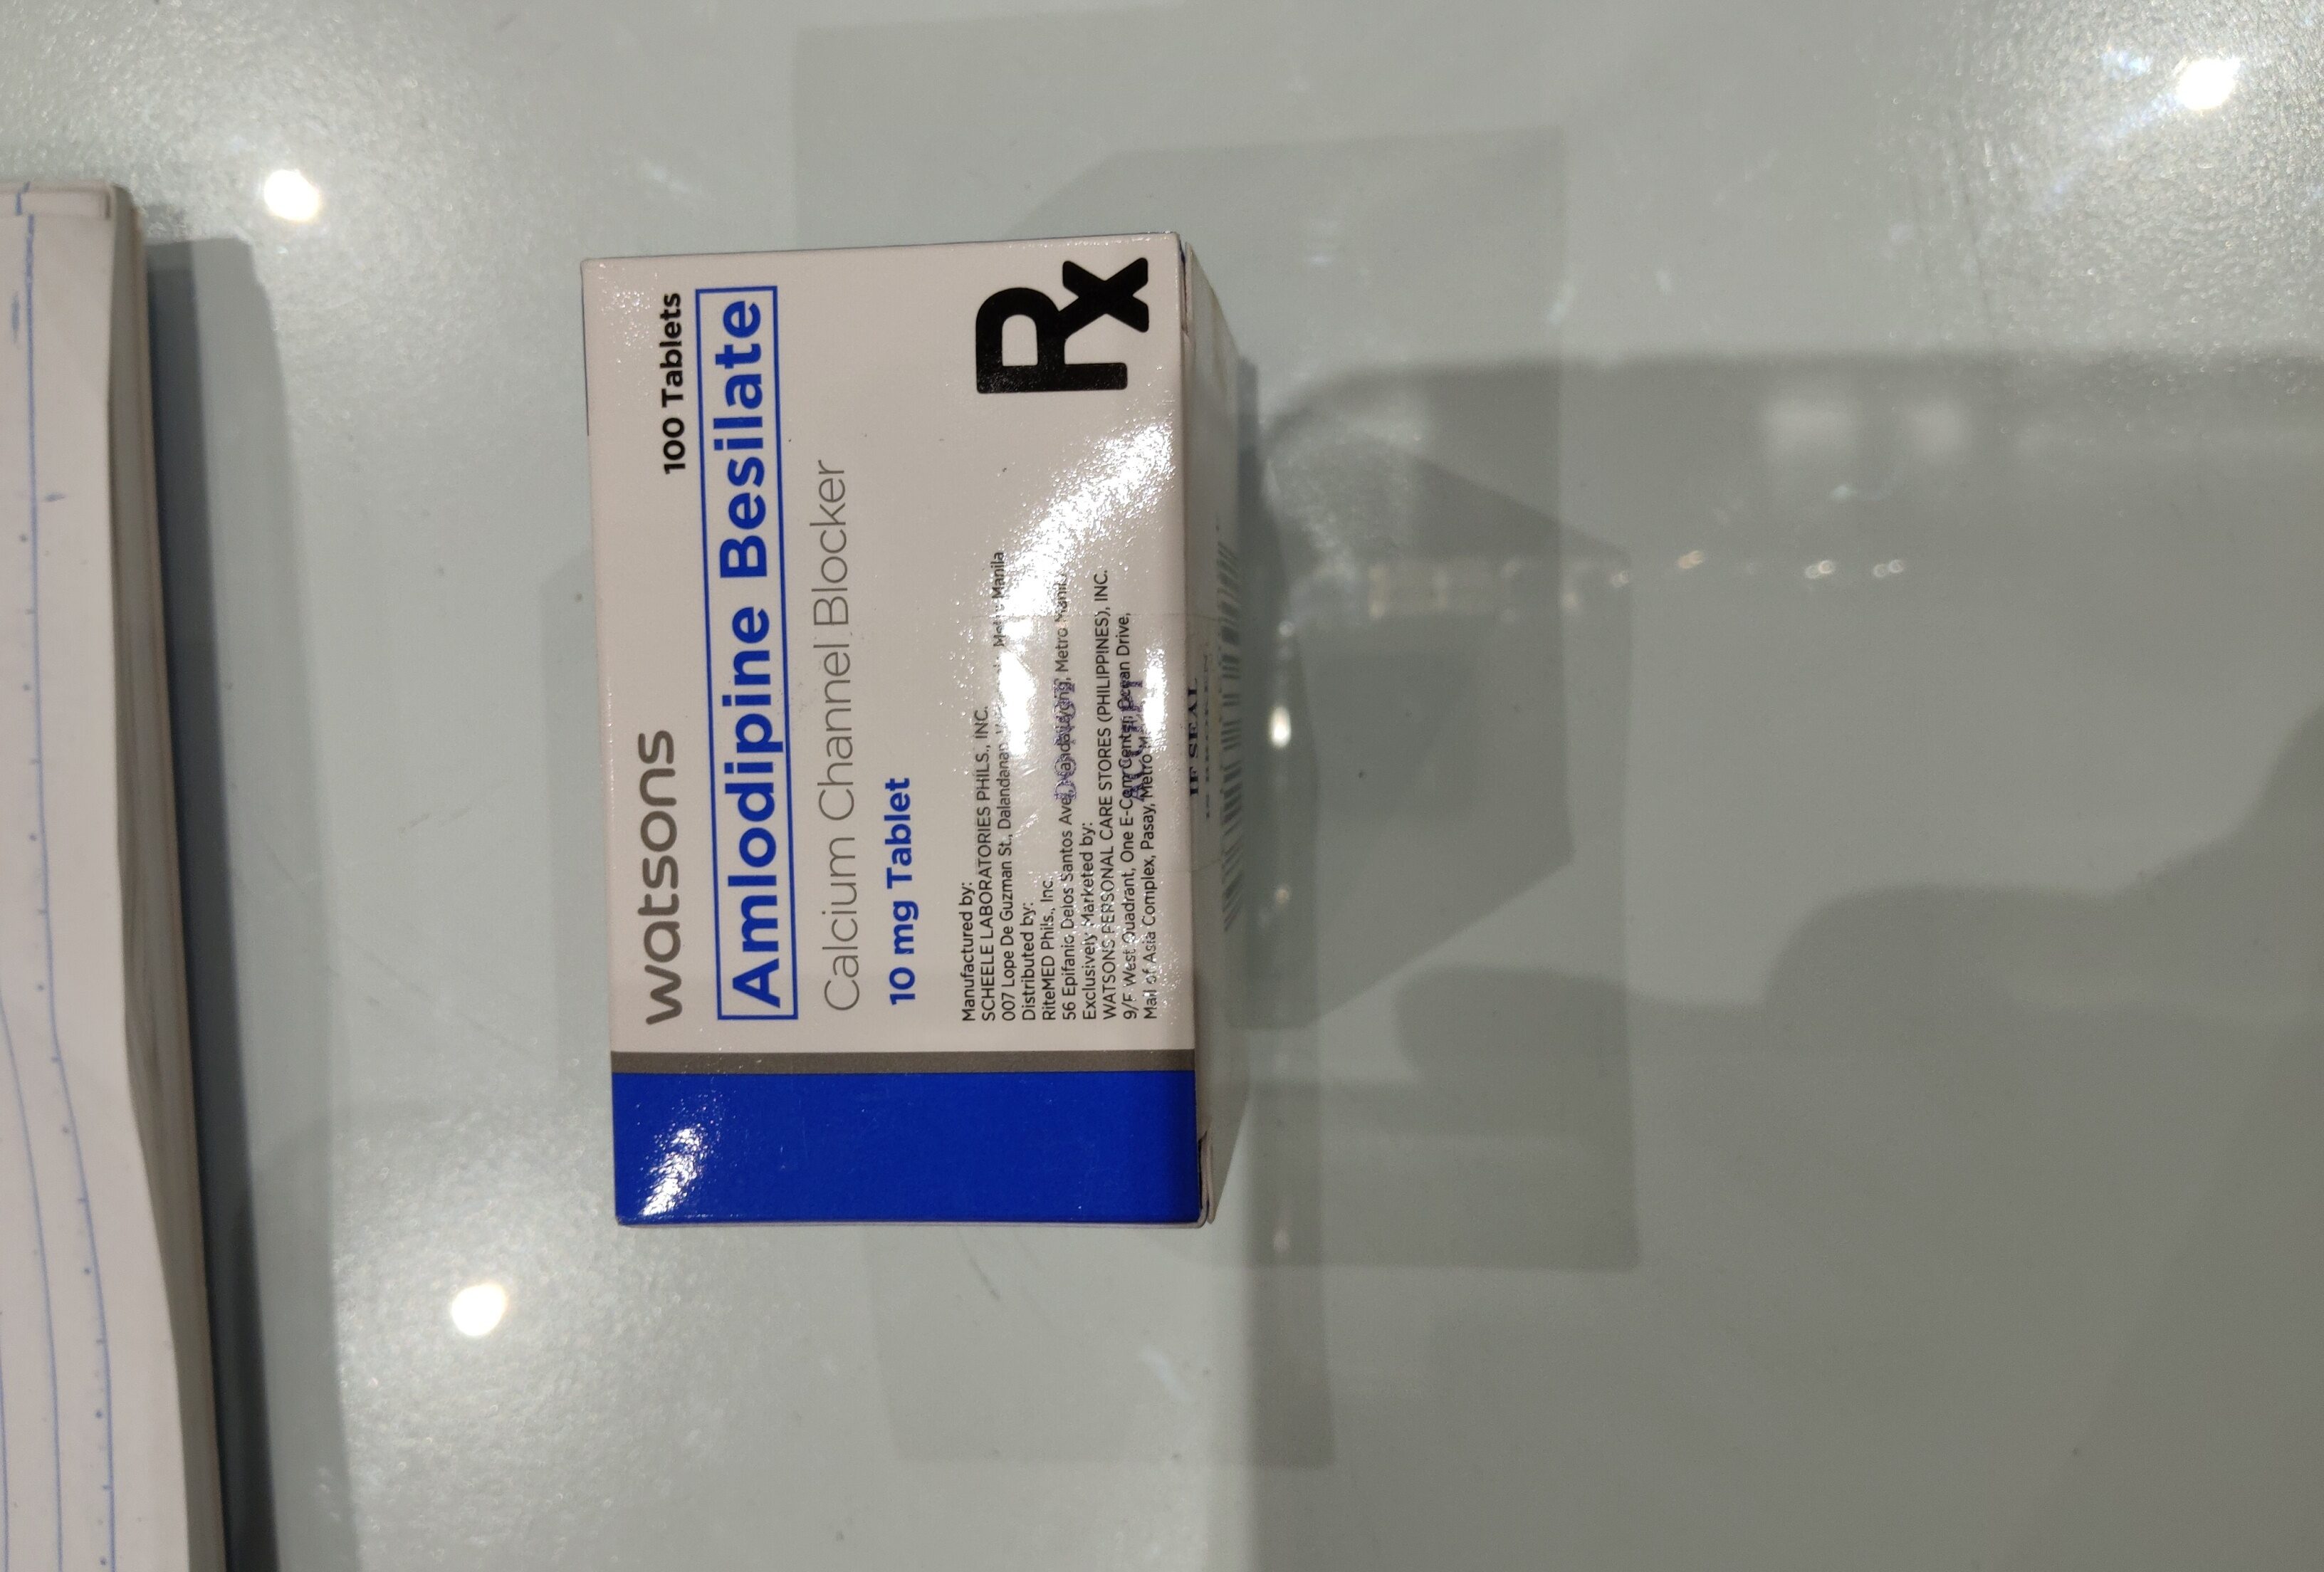 amlodipine 10mg - Product - en